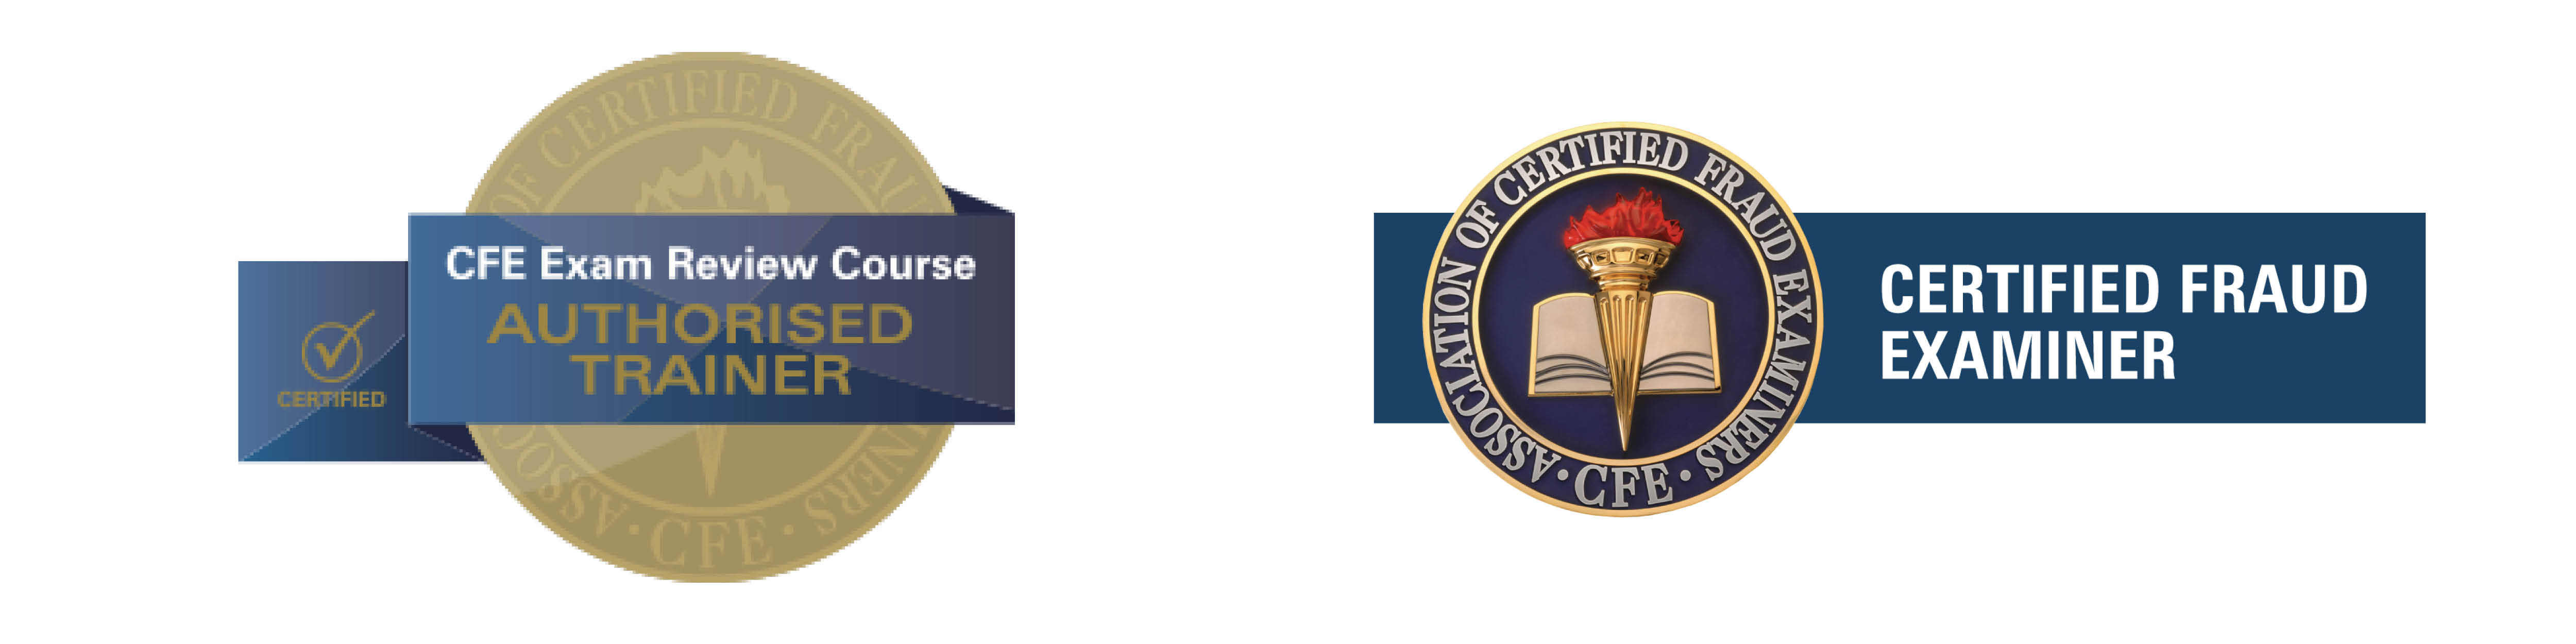 CFE Exam Review Course - Authorised Trainer logo